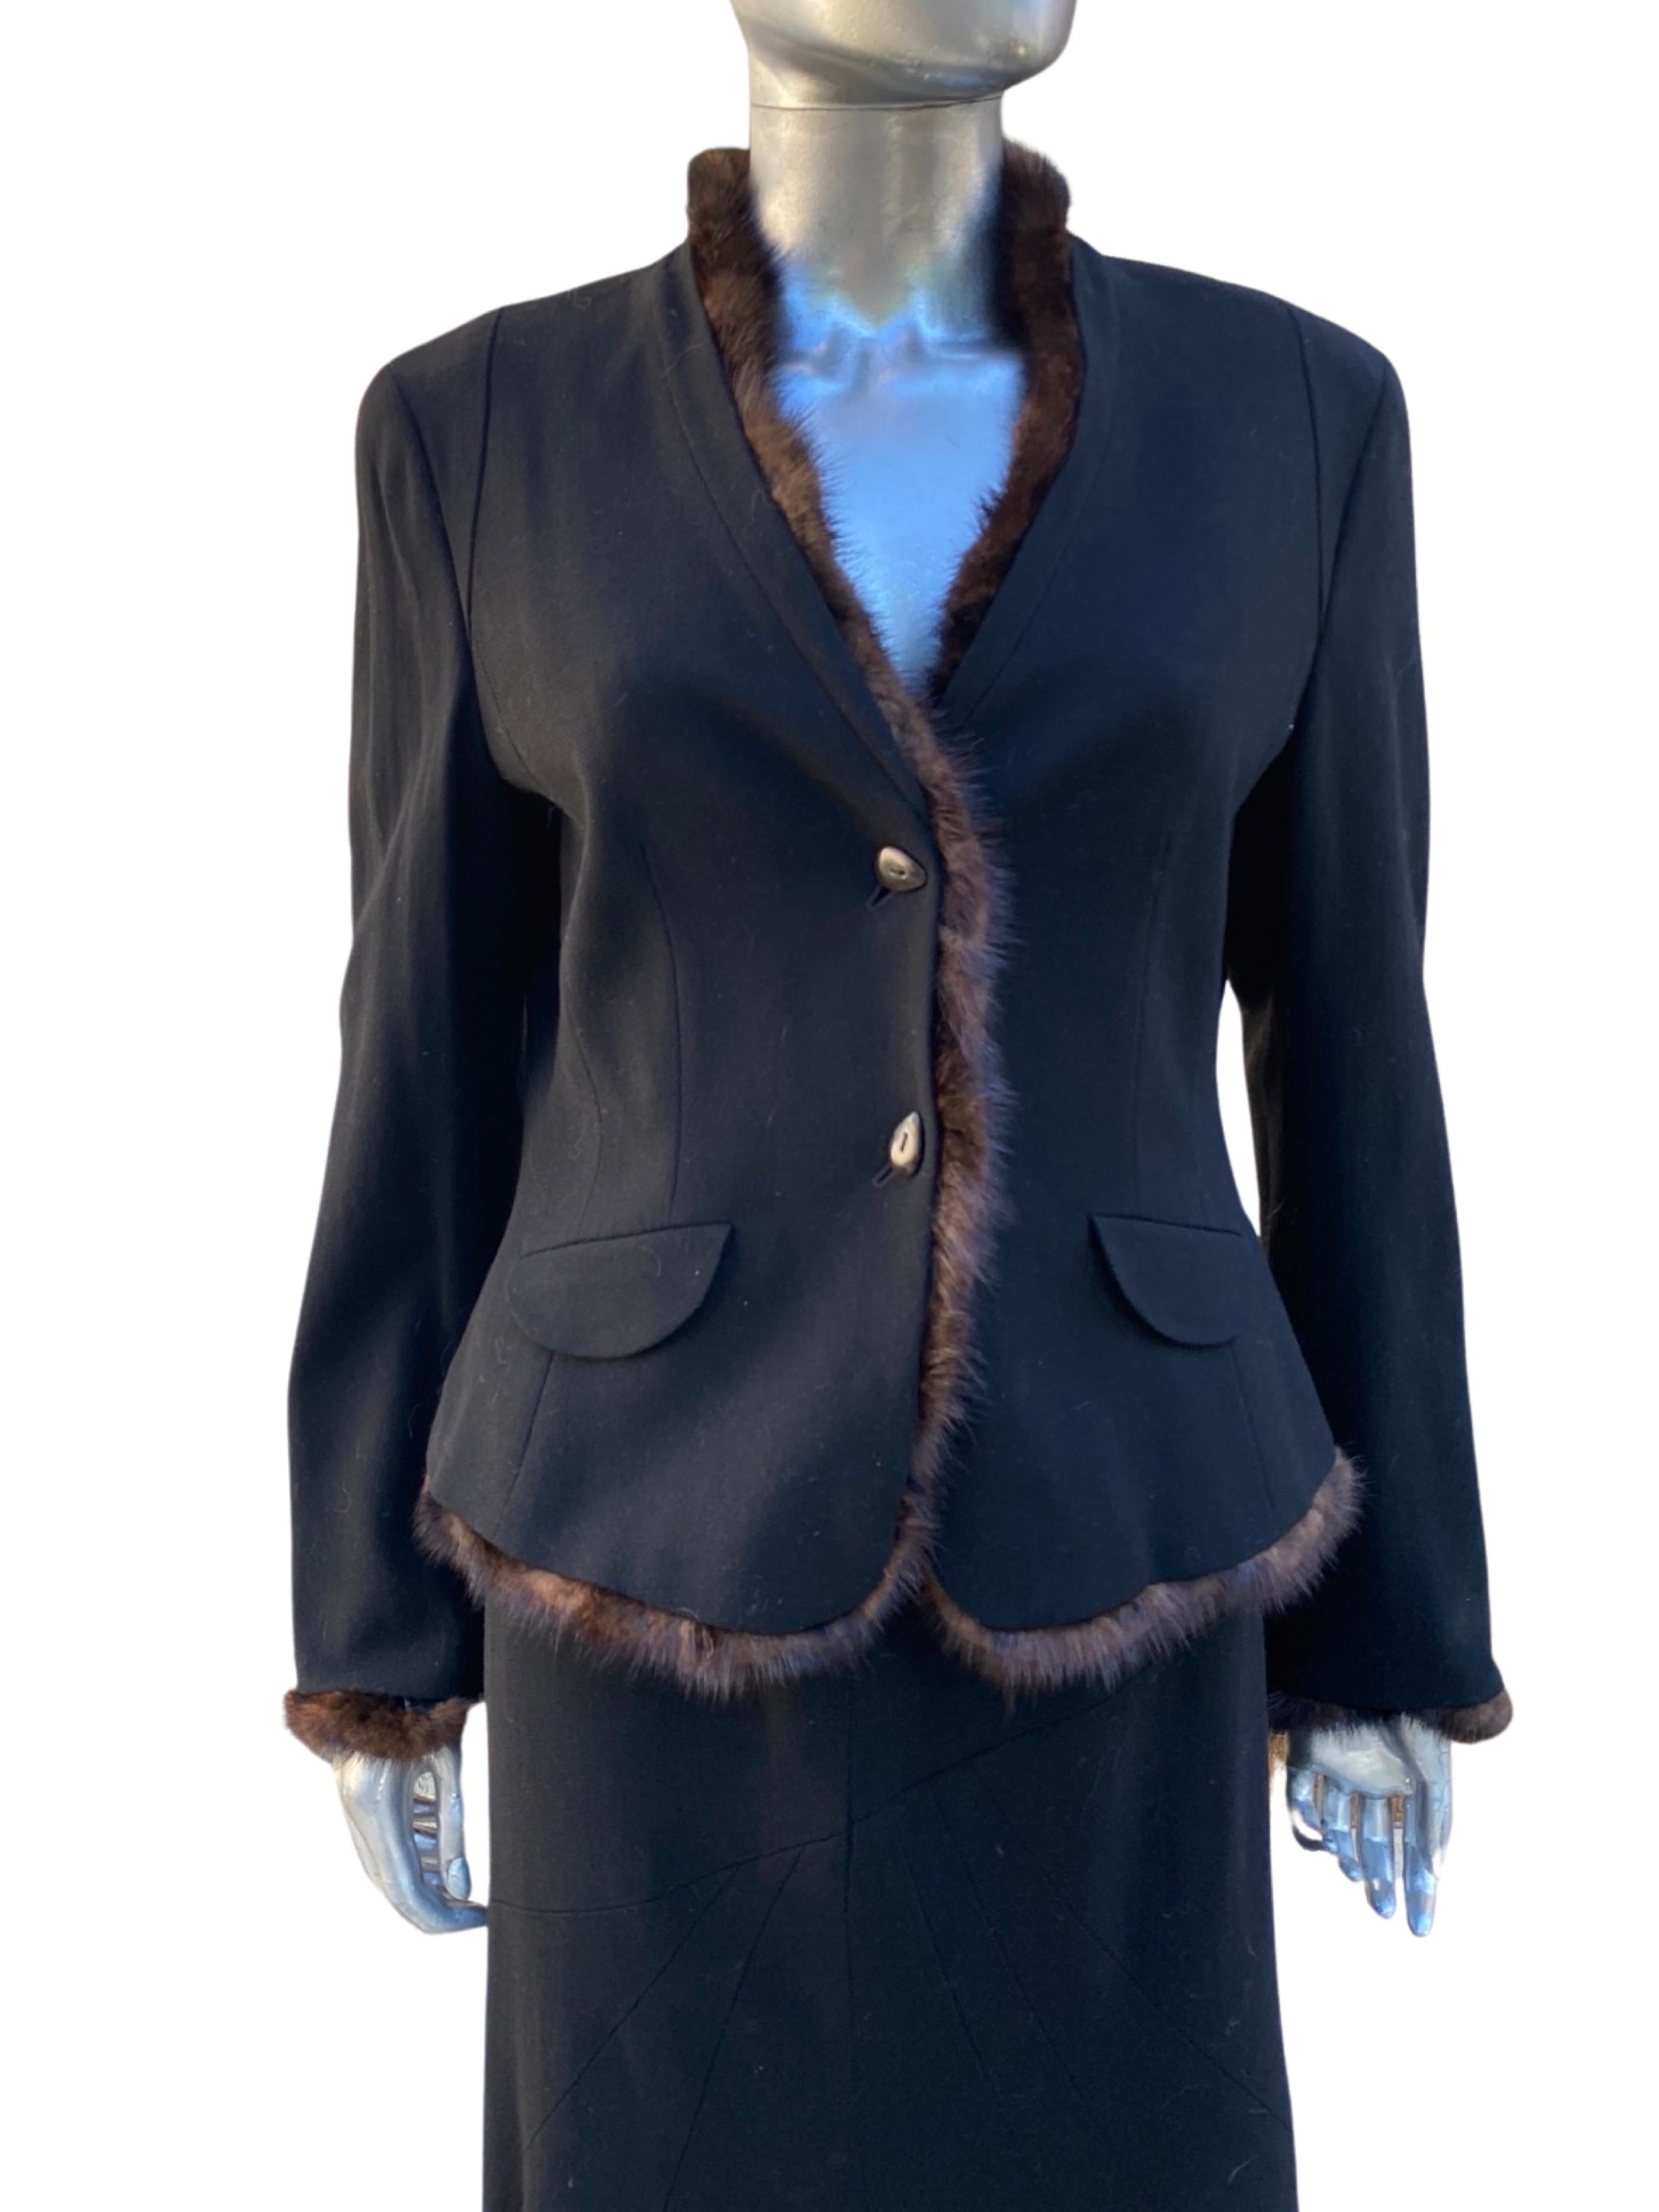 Worth New York CHIC! Black Wool Crepe Suit w/ Mink Trim Jacket Sz 12/14 For Sale 6